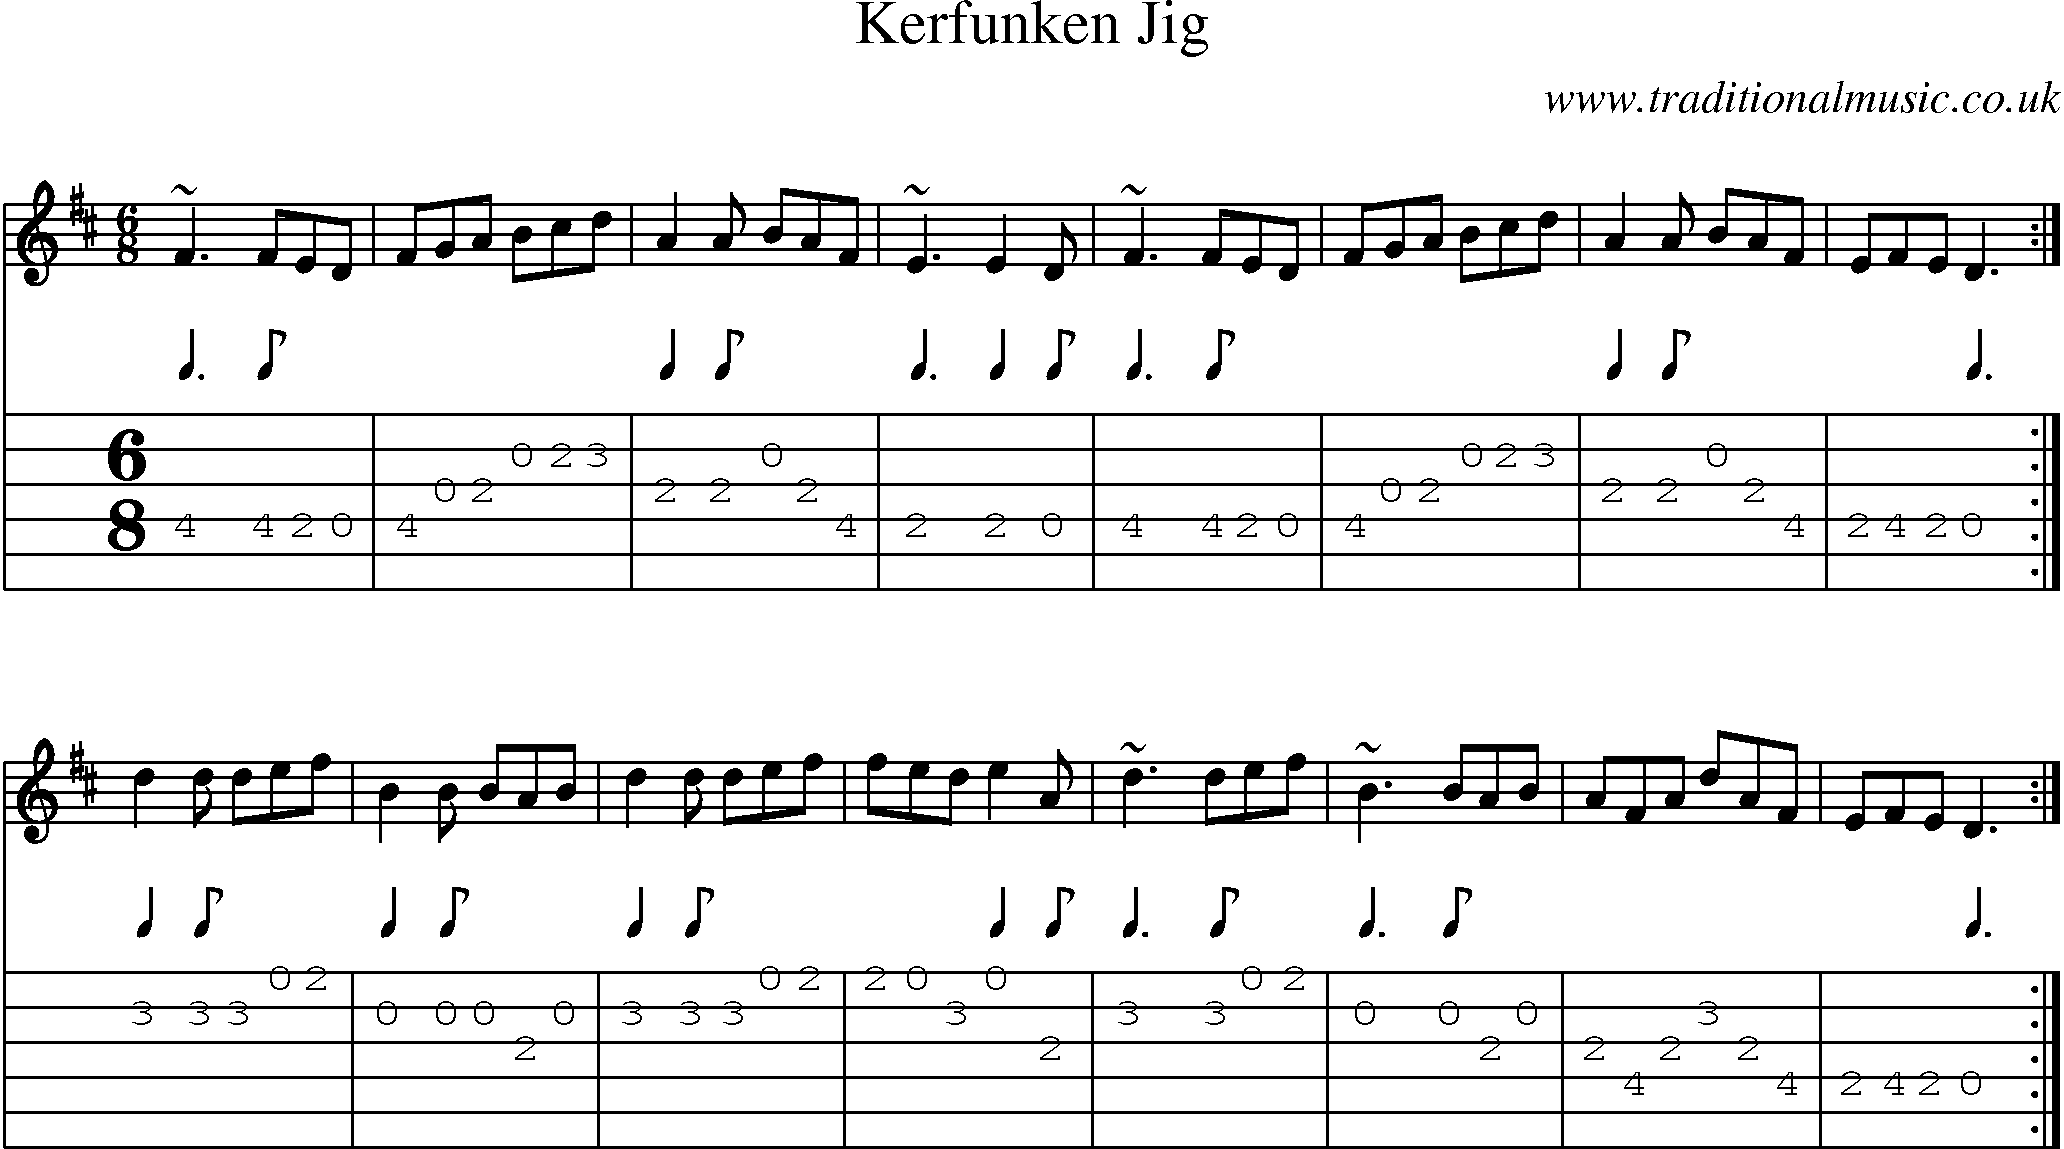 Music Score and Guitar Tabs for Kerfunken Jig